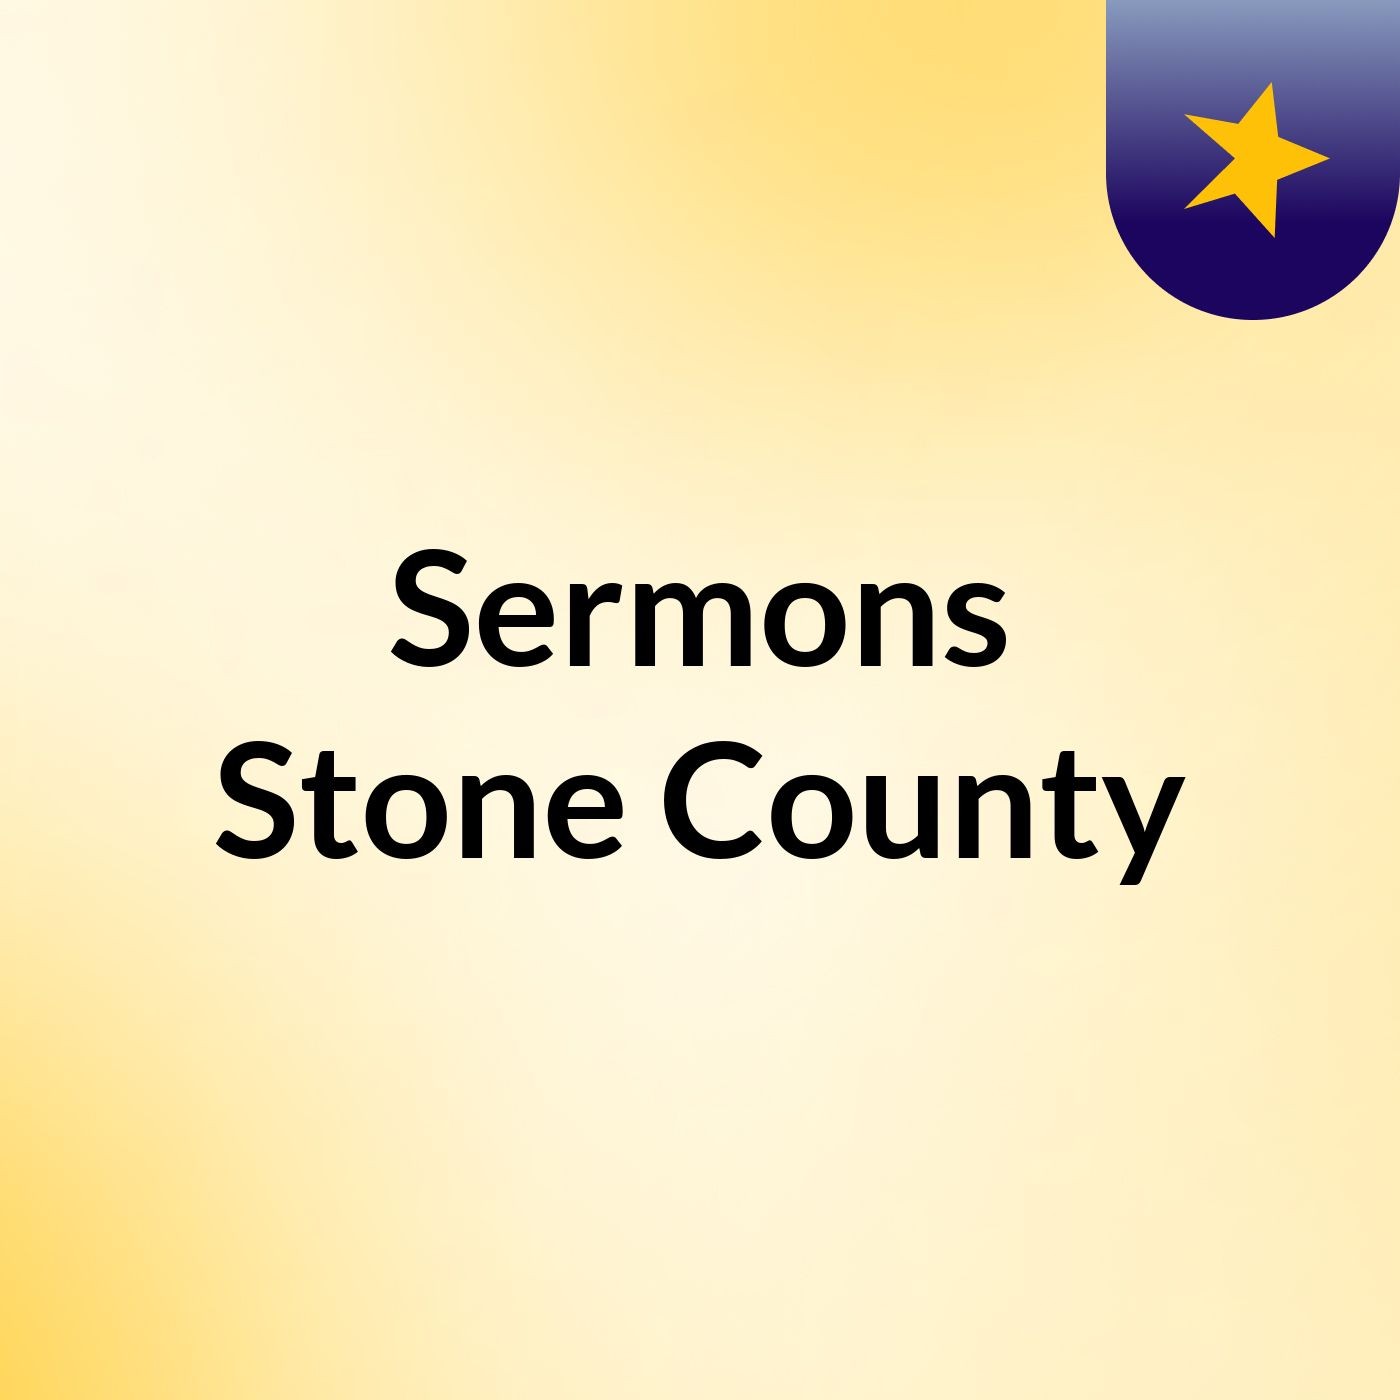 Sermons Stone County